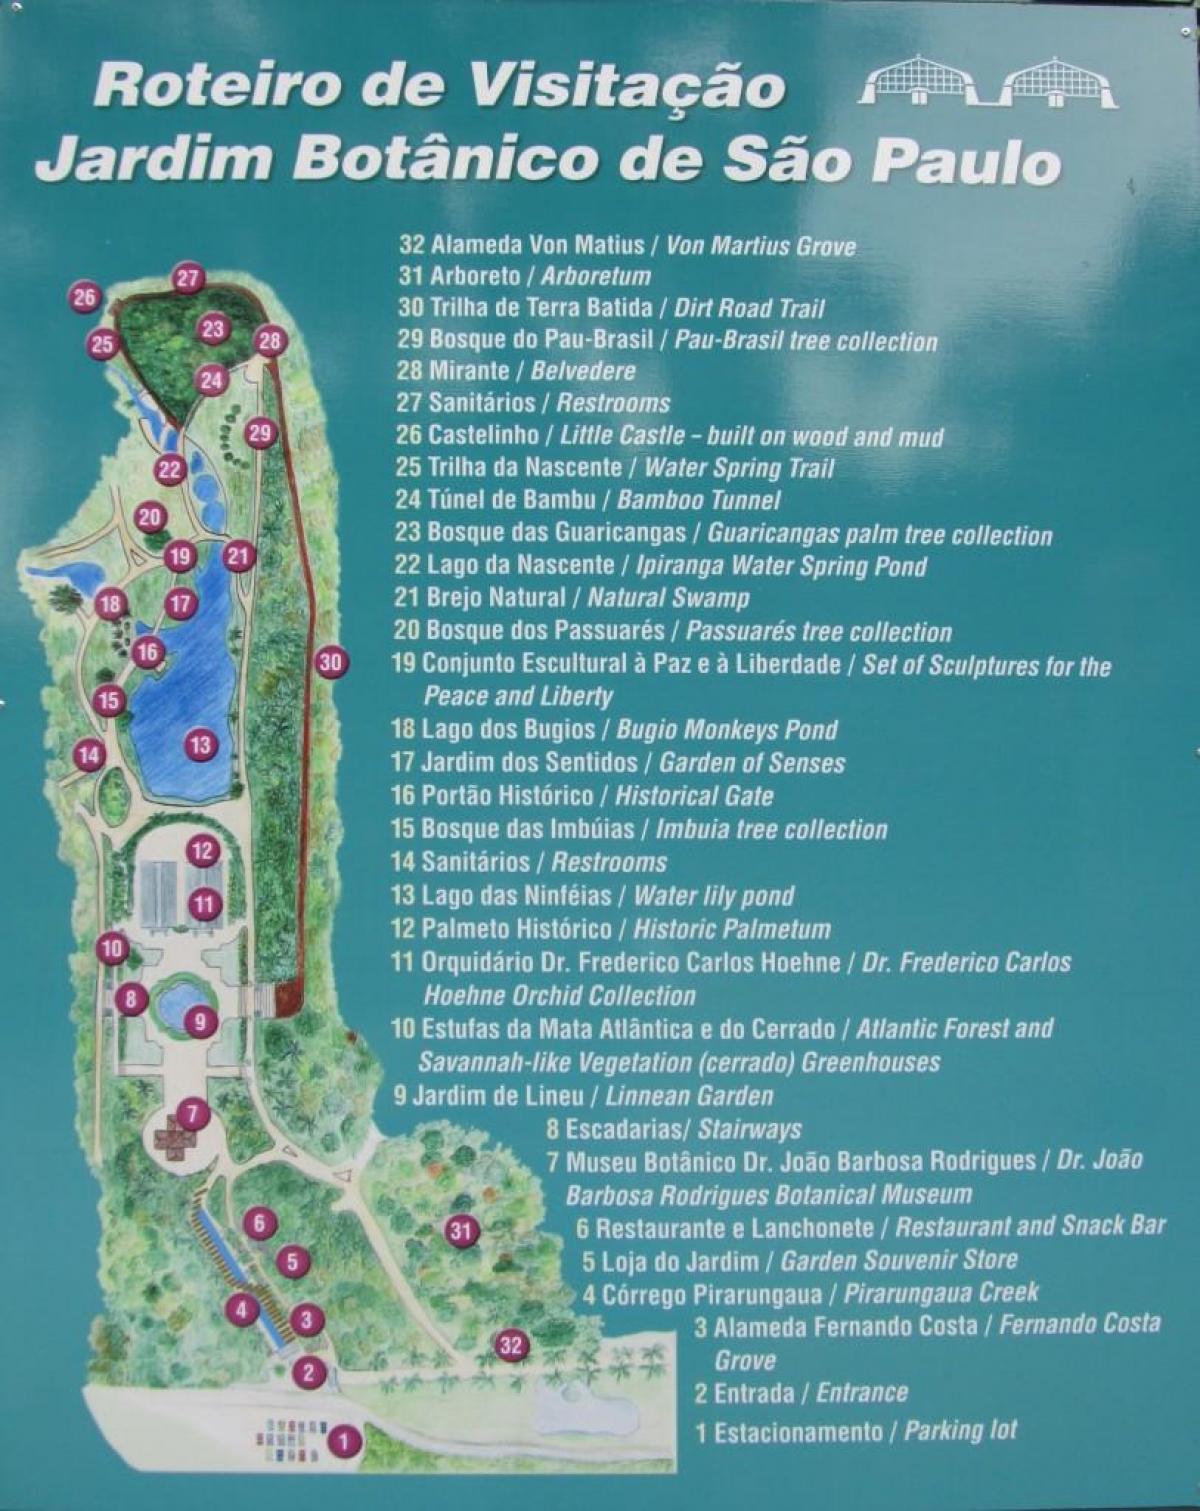 Kort over botanisk have, São Paulo